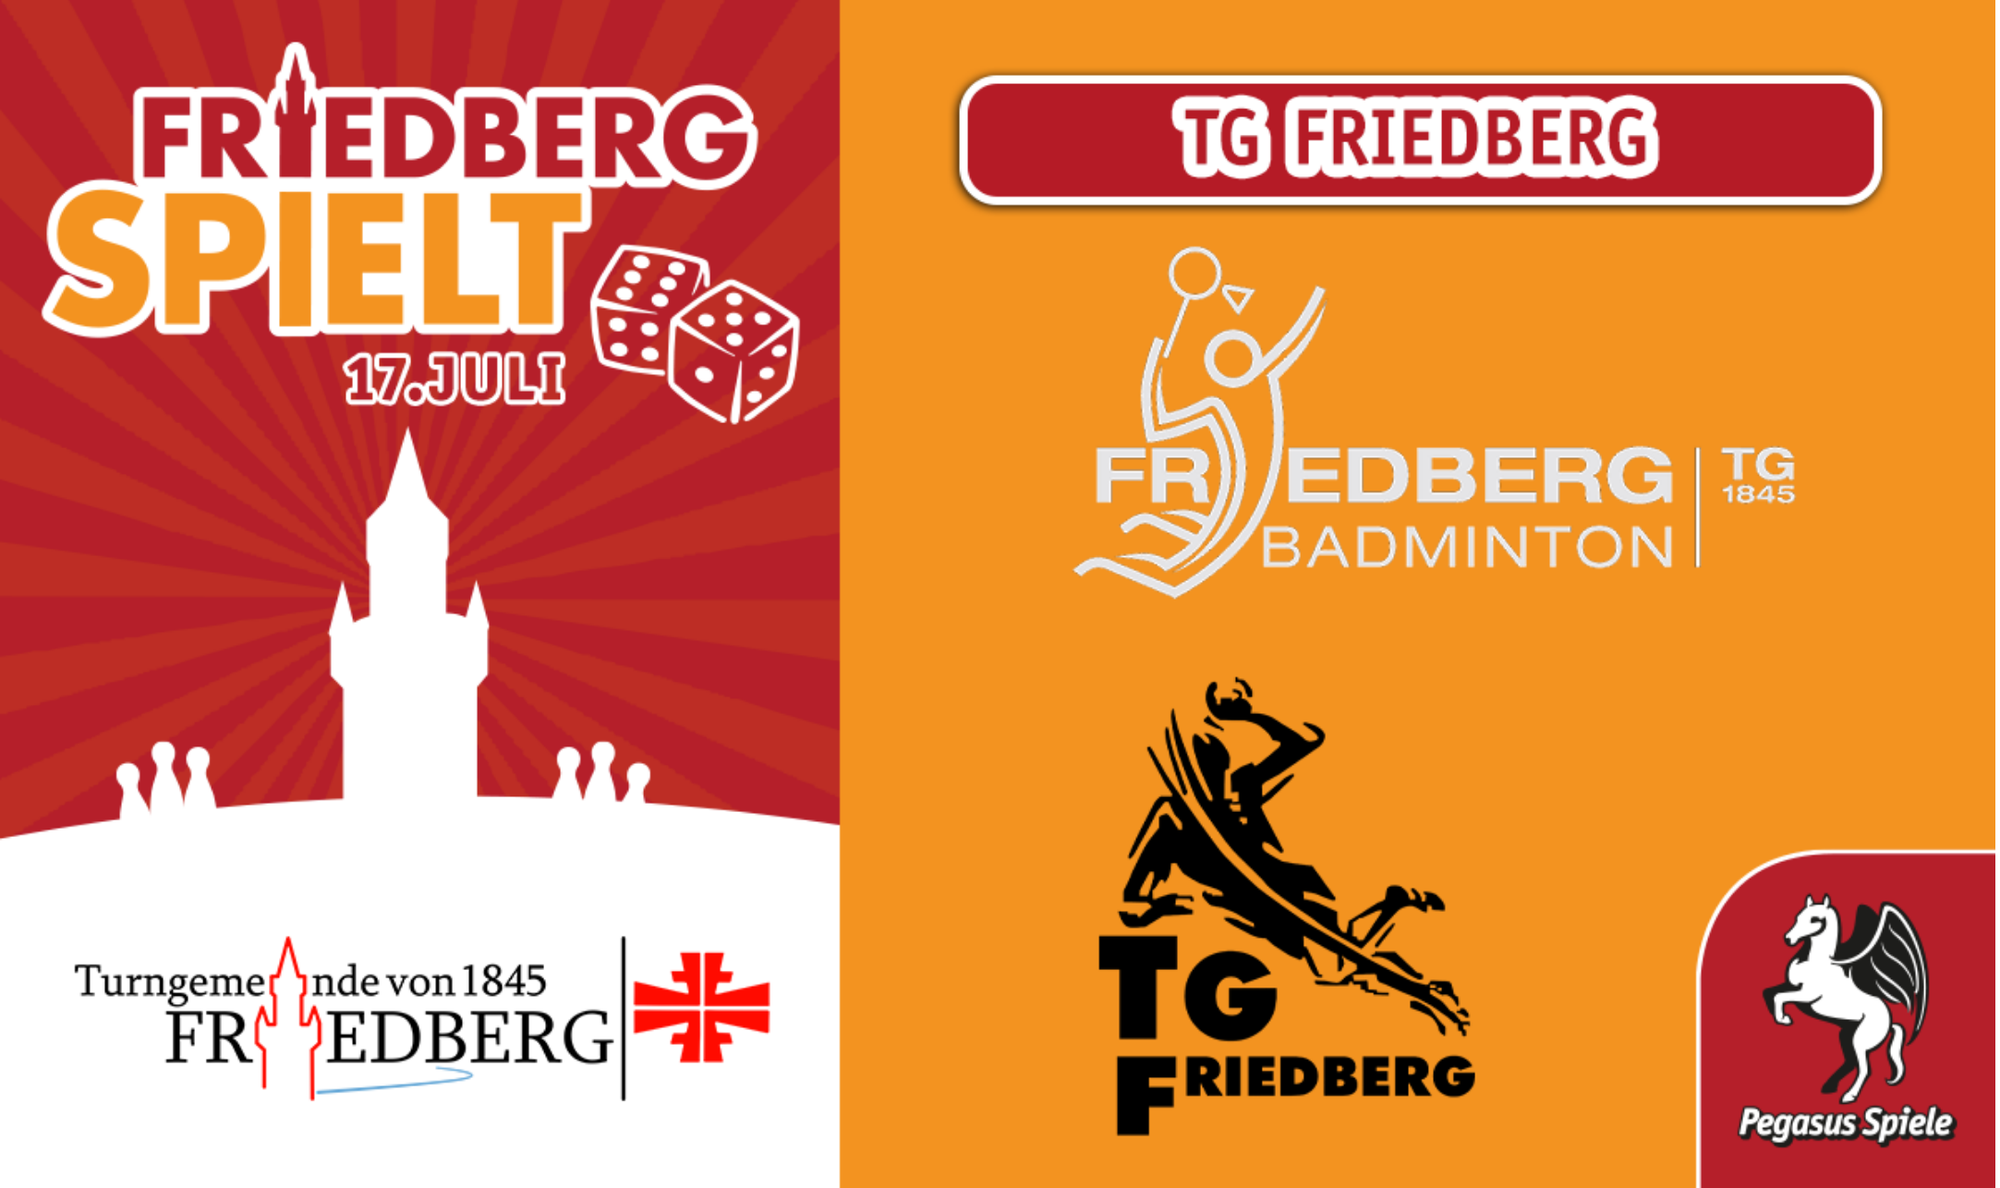 "Friedberg spielt" am 17.07.2022